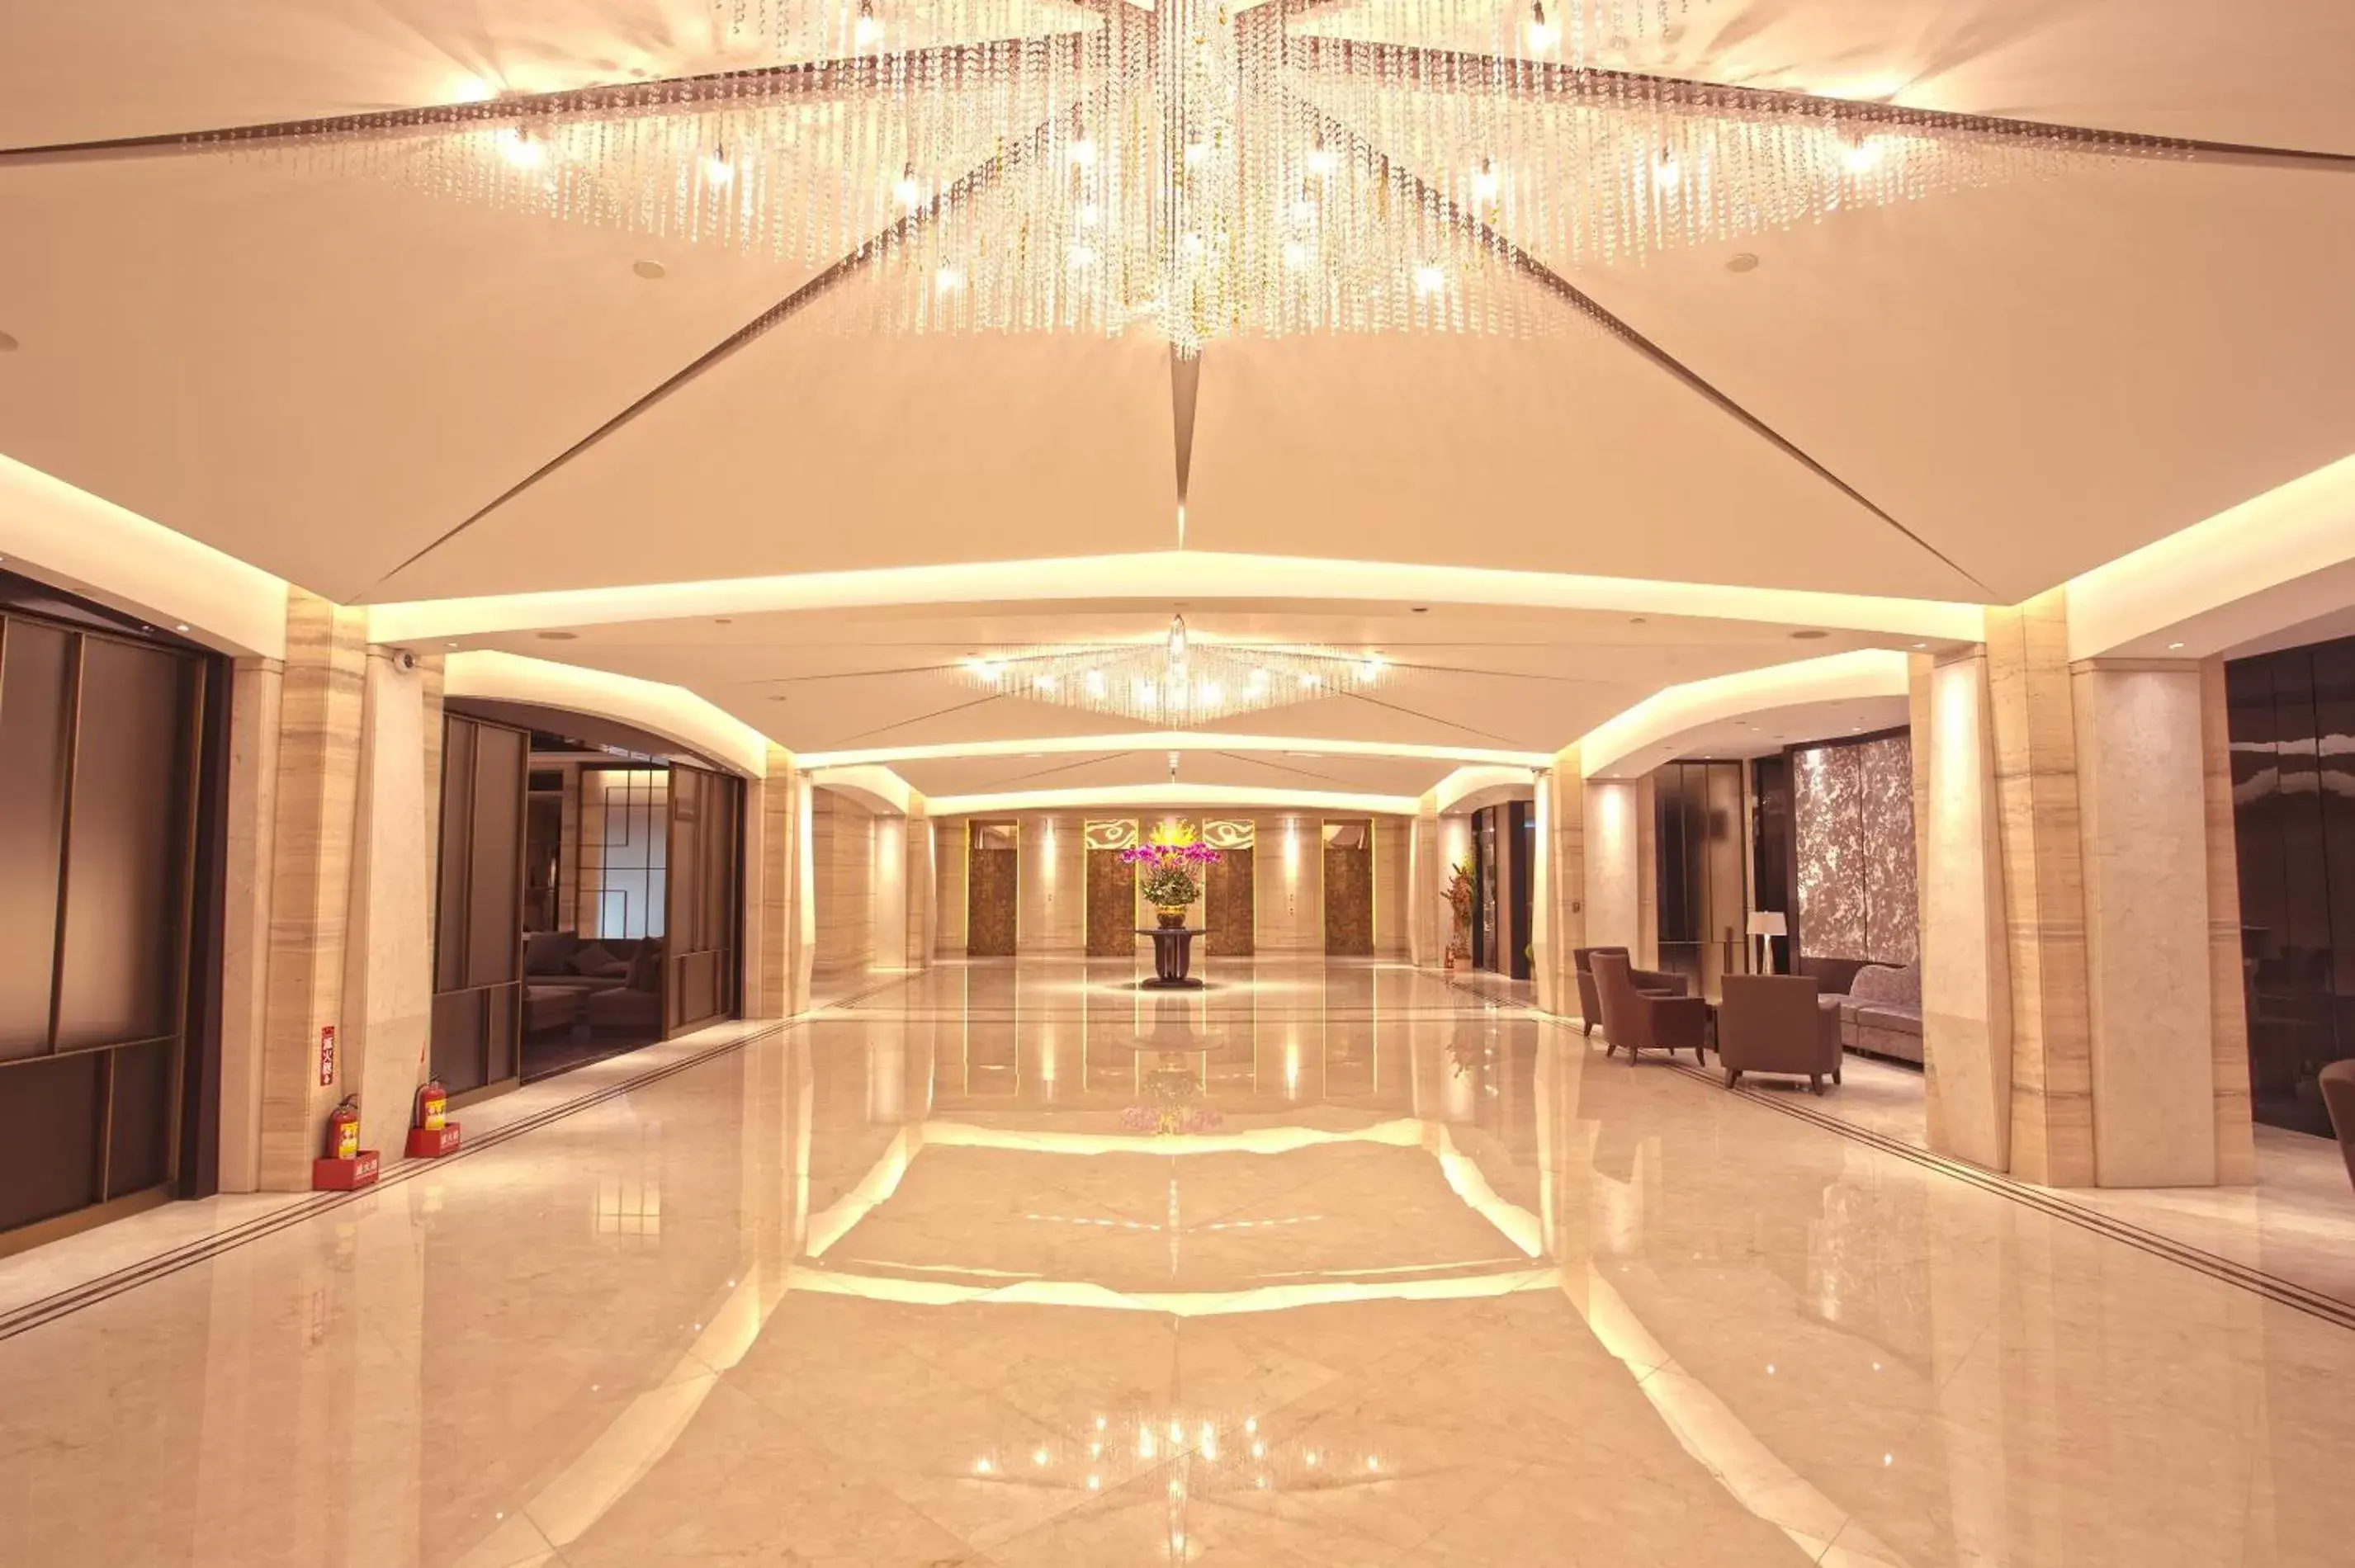 Lobby or reception in Splendor Hotel